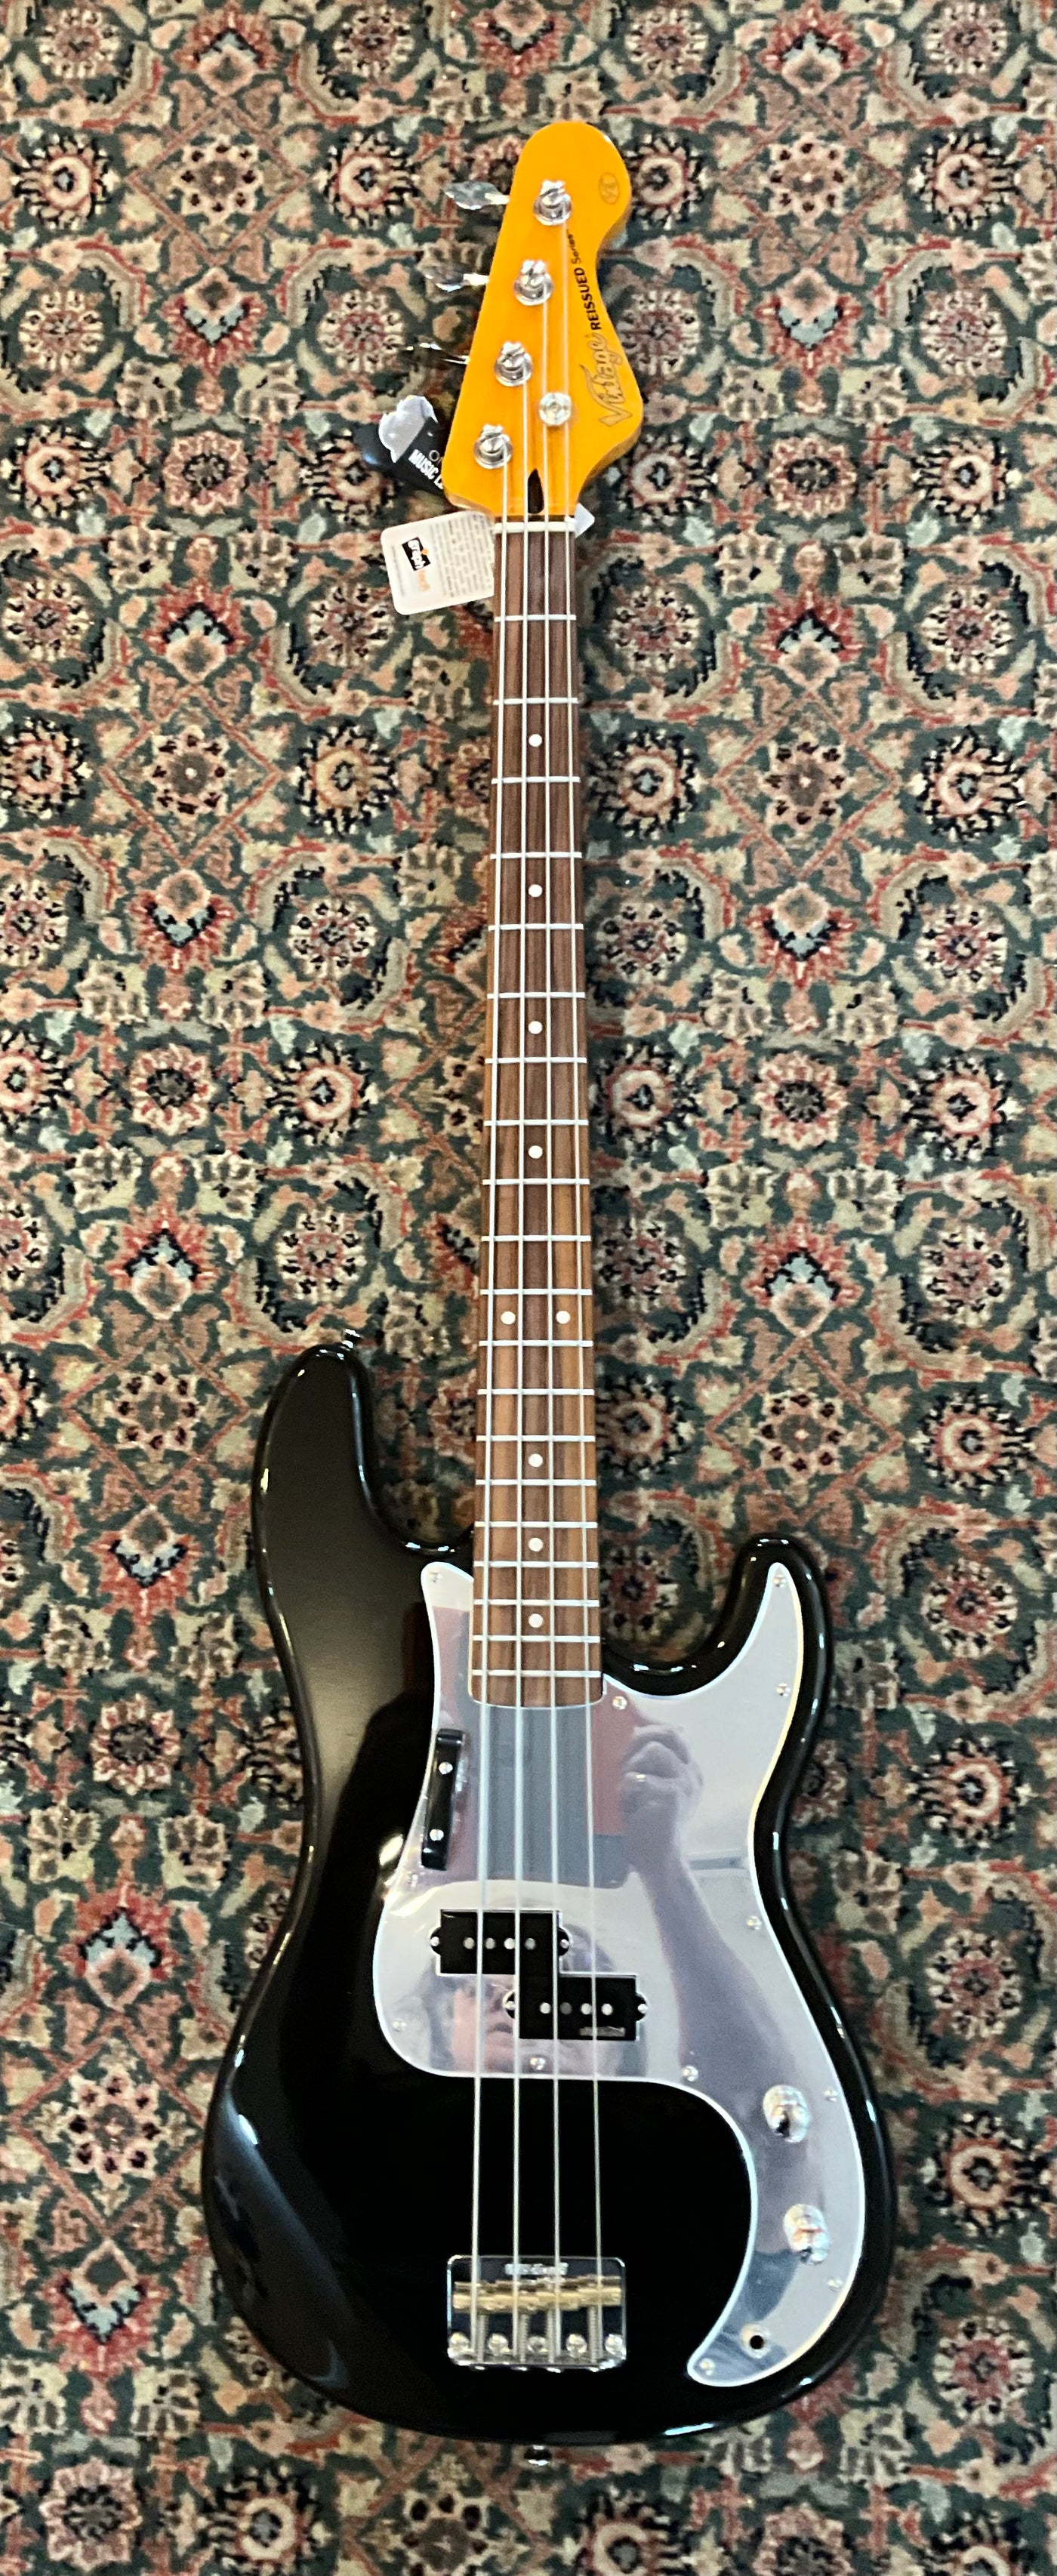 Vintage brand P style Bass